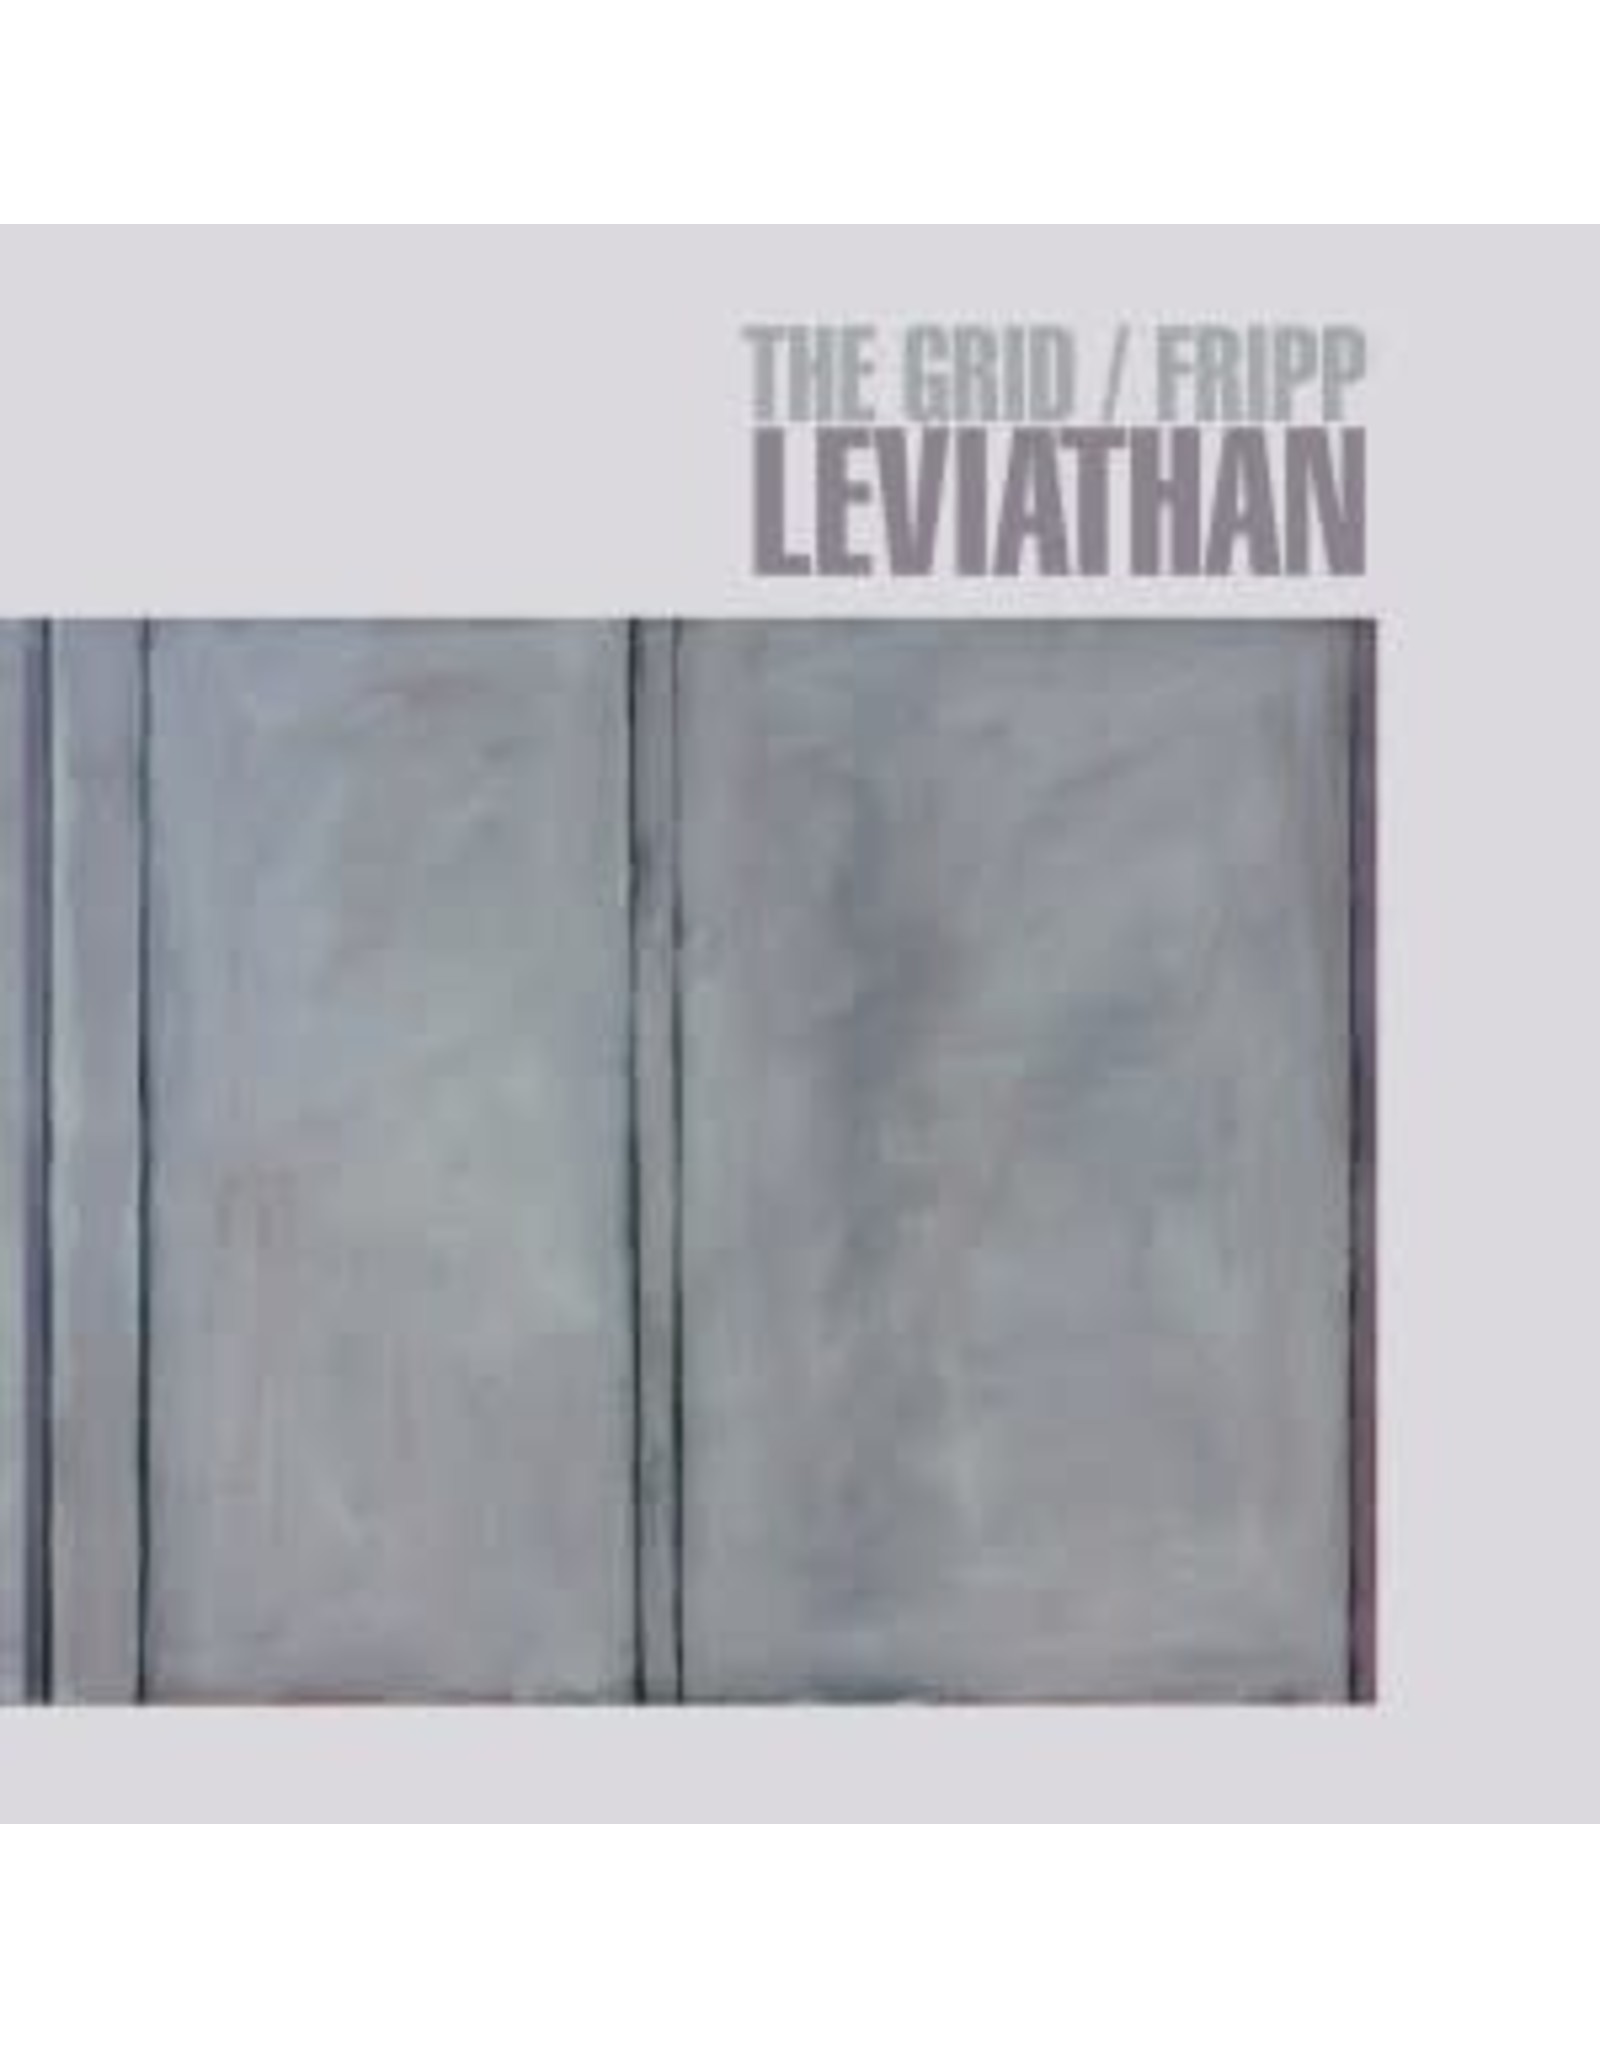 Panegyric Fripp, Robert & The Grid: Leviathan LP